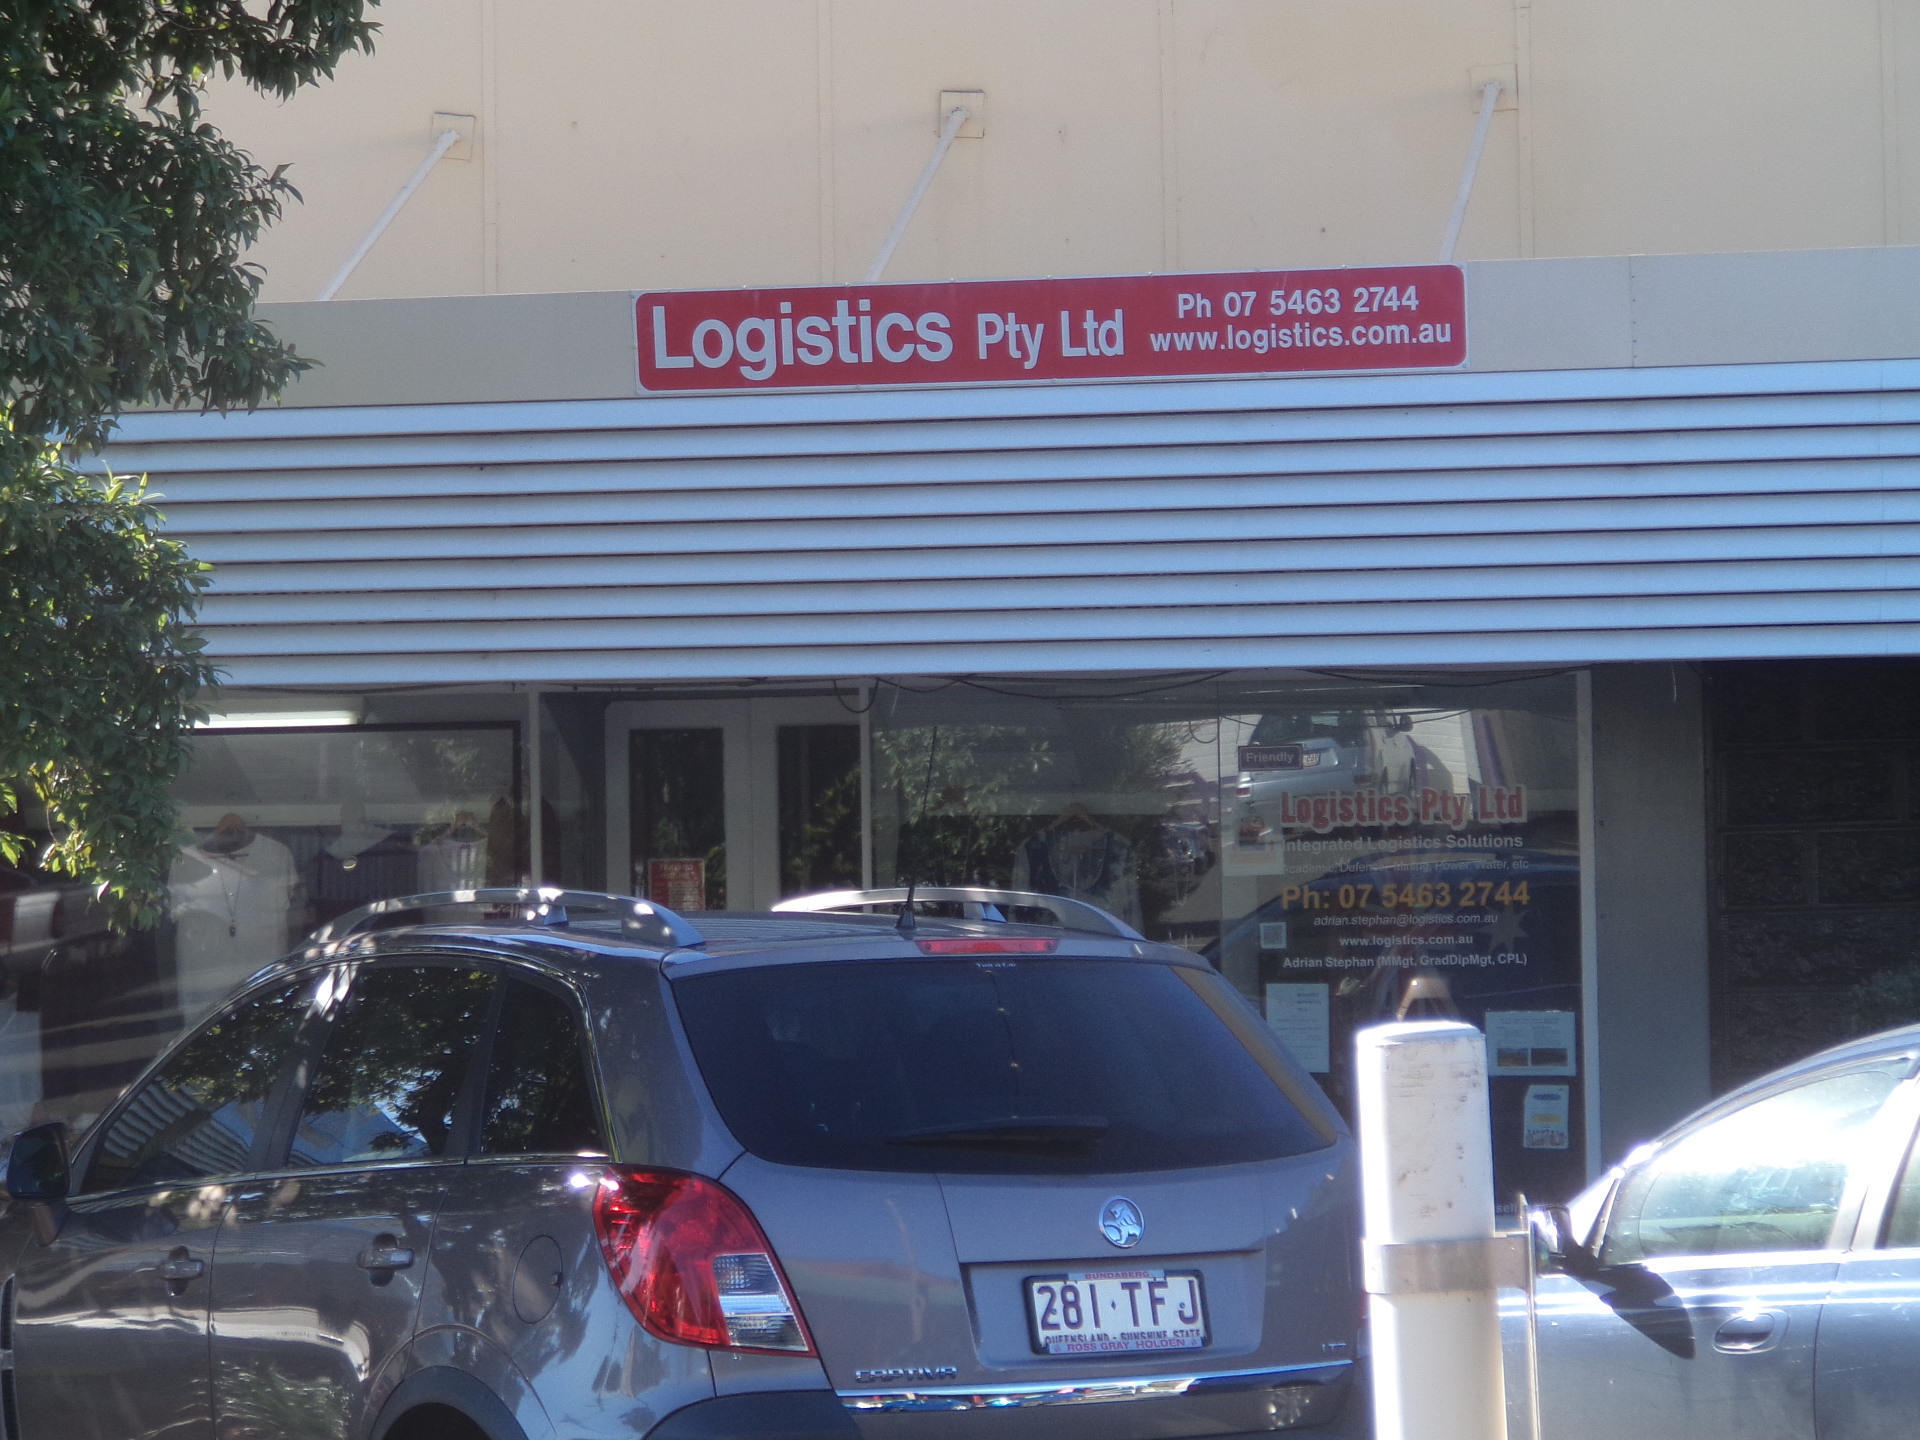 Logistics Pty Ltd office.